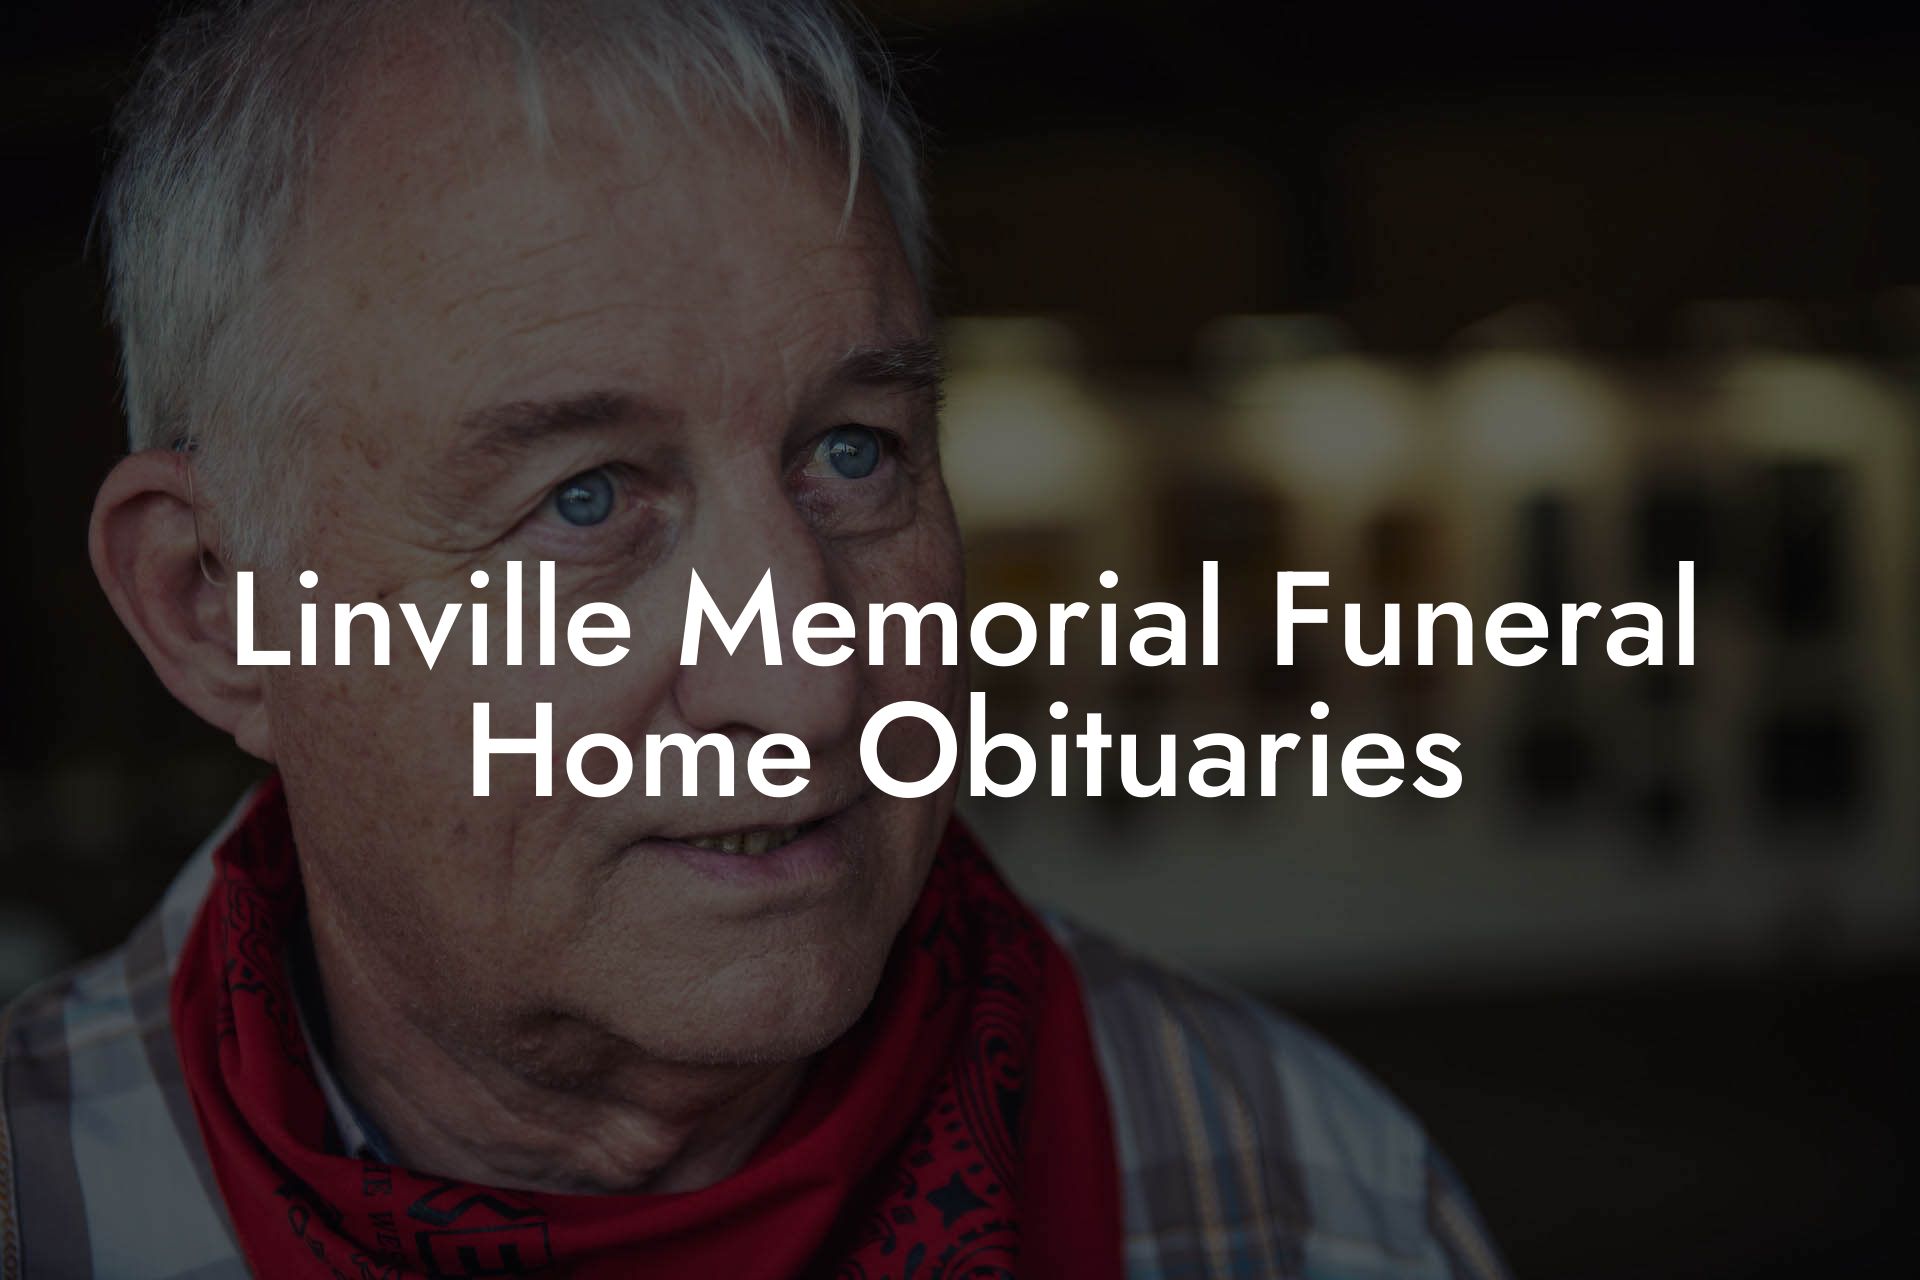 Linville Memorial Funeral Home Obituaries